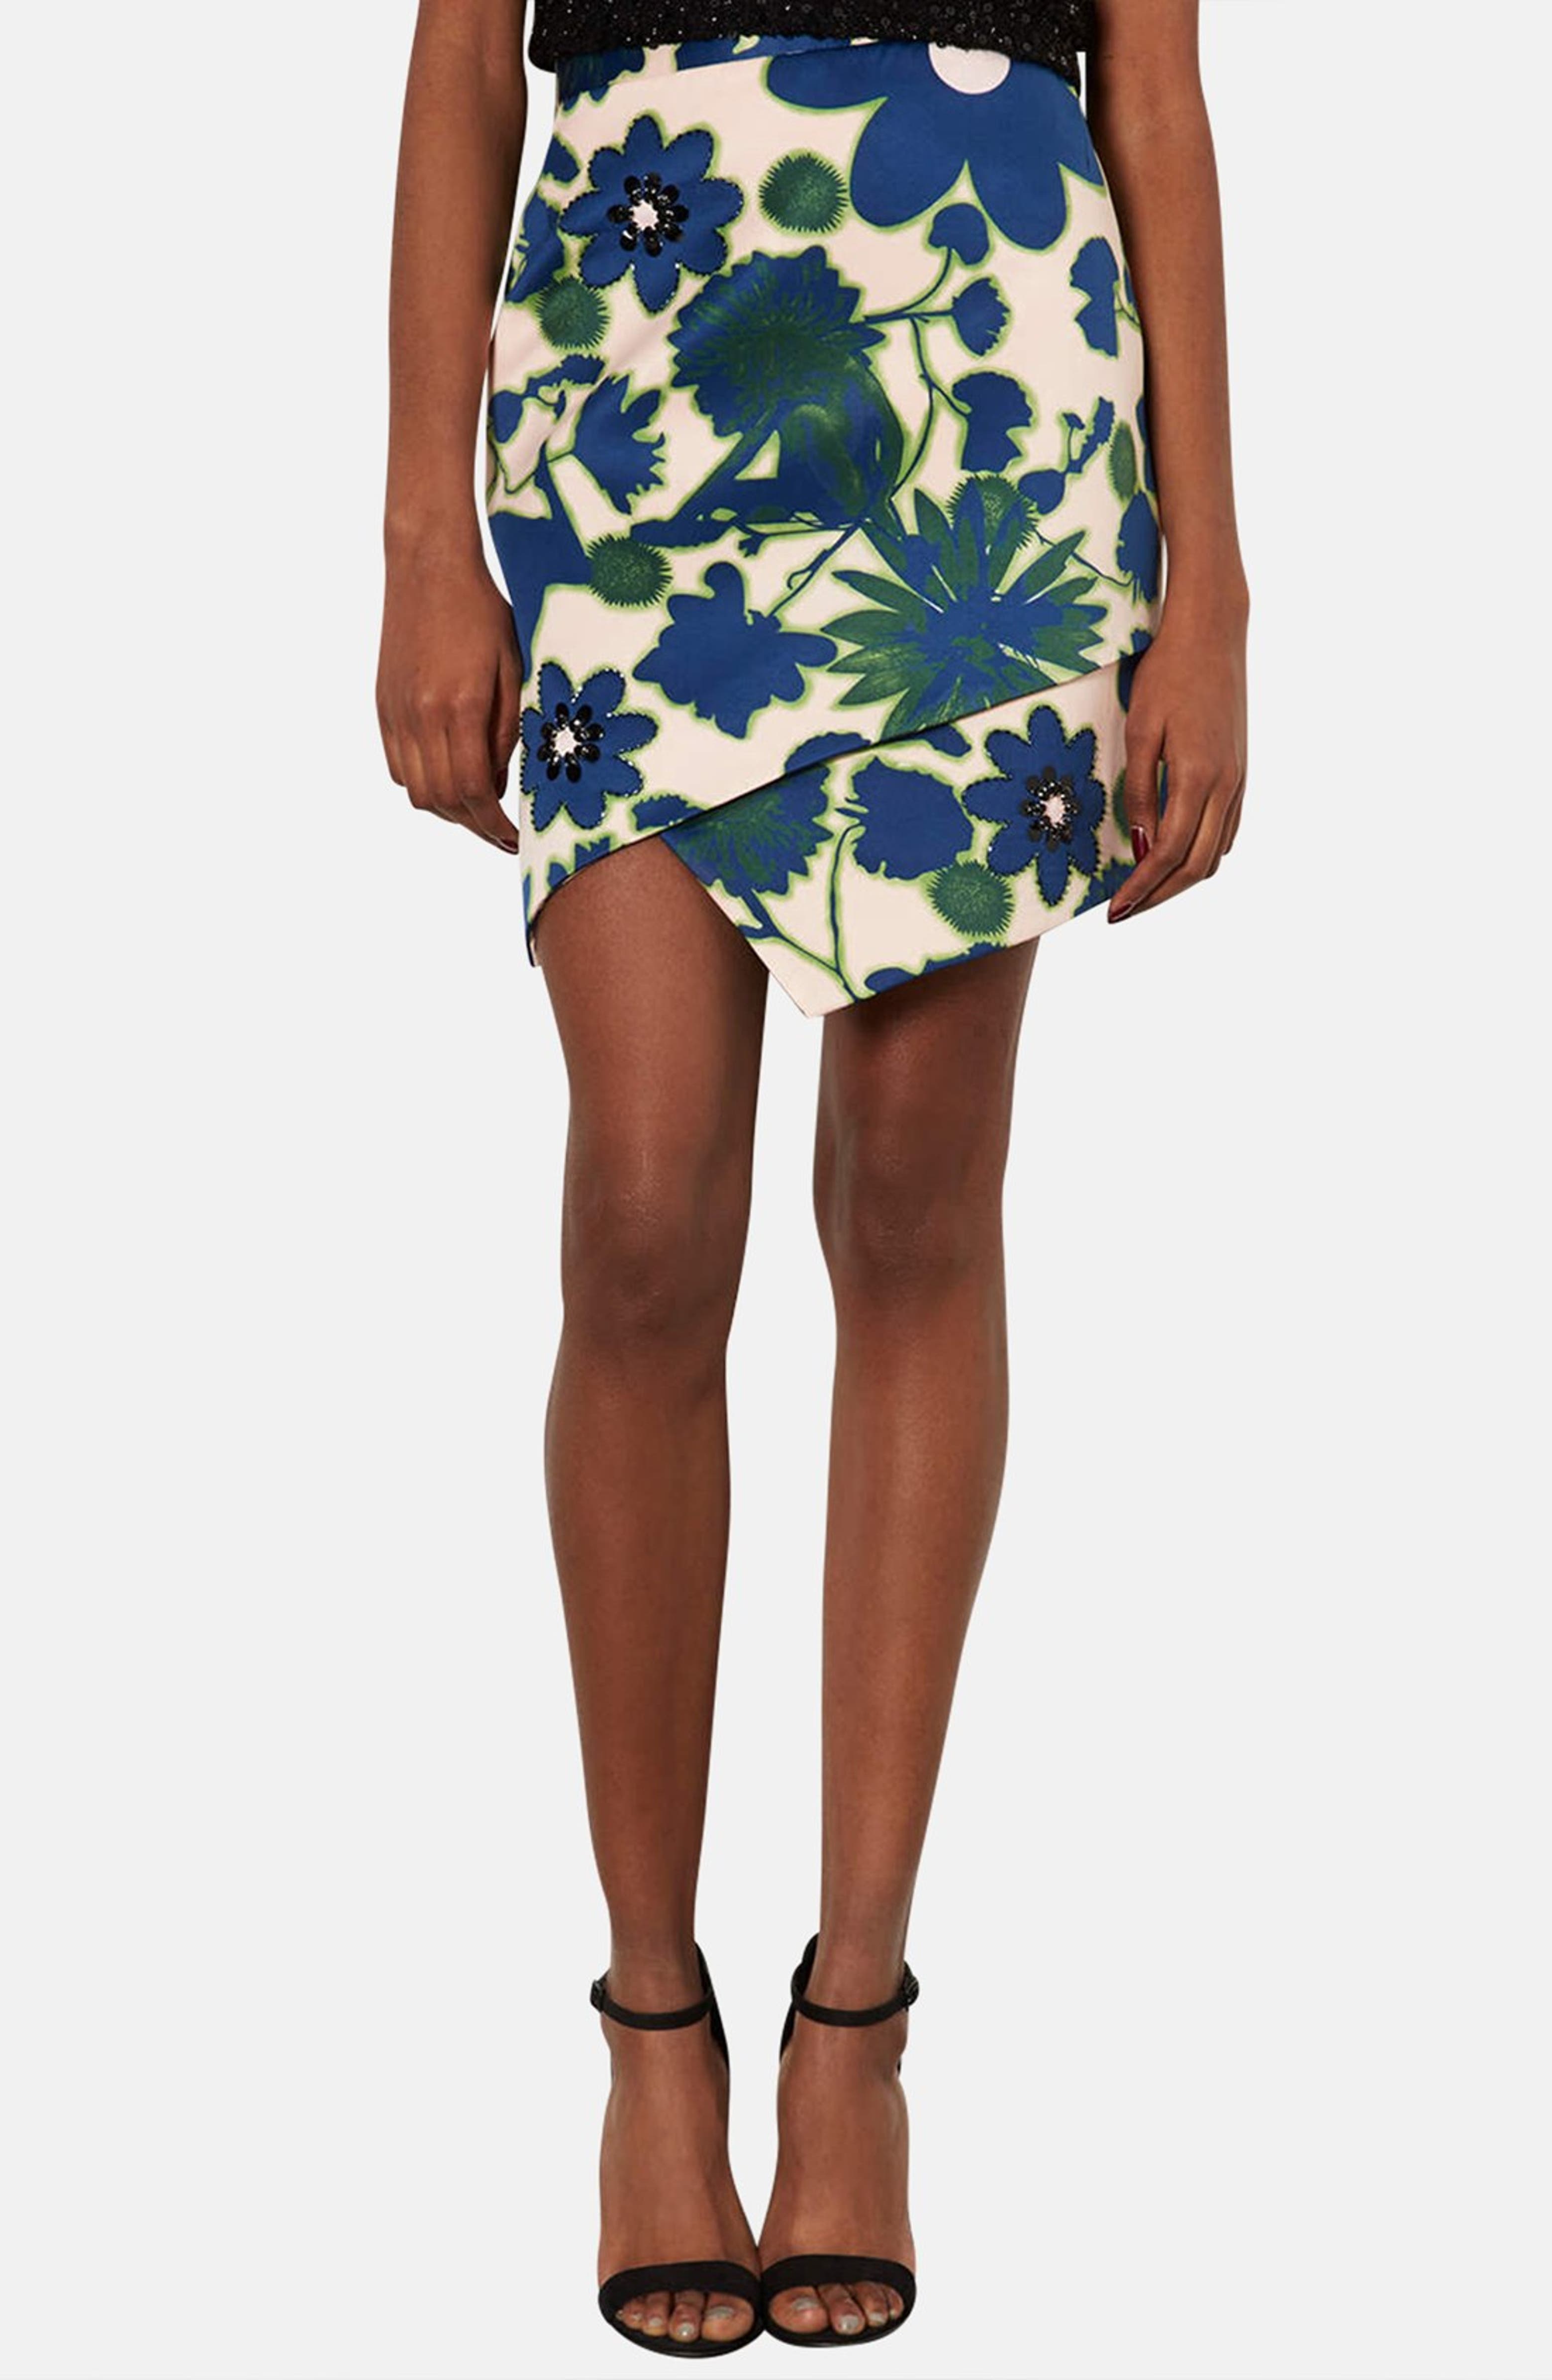 Topshop 'Floral X-Ray' Embellished Print Skirt | Nordstrom